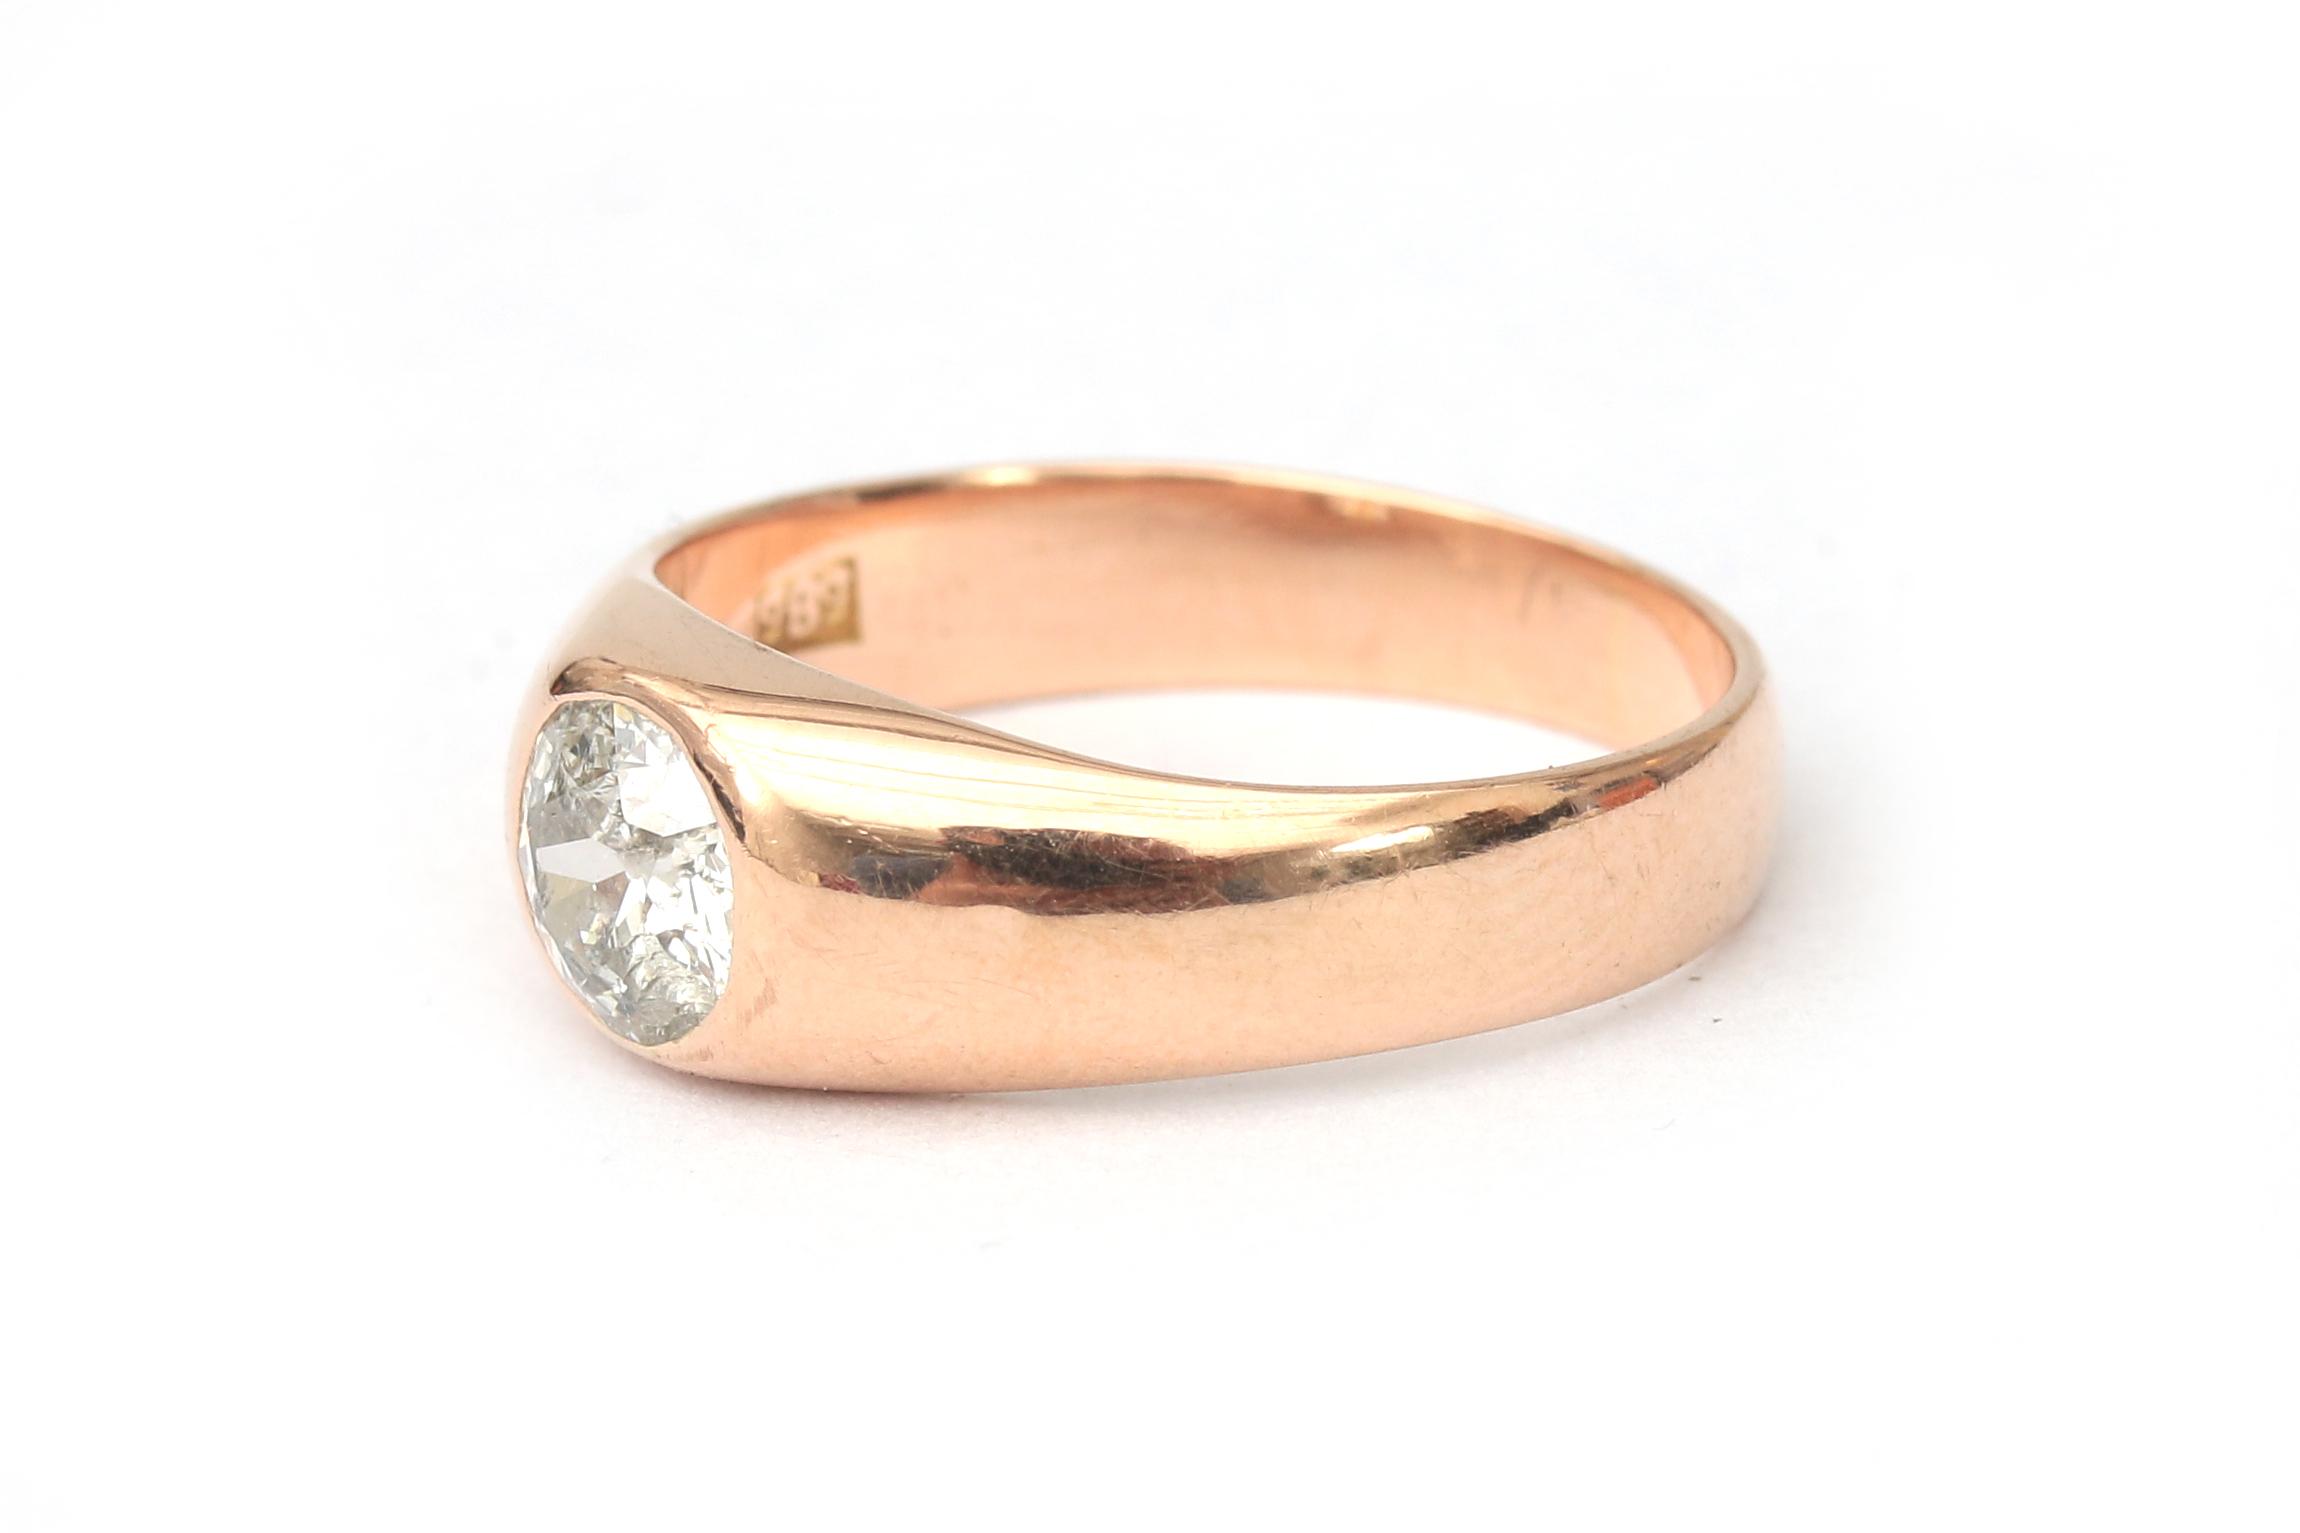 A 14 karat rose gold diamond gypsy ring - Image 2 of 2